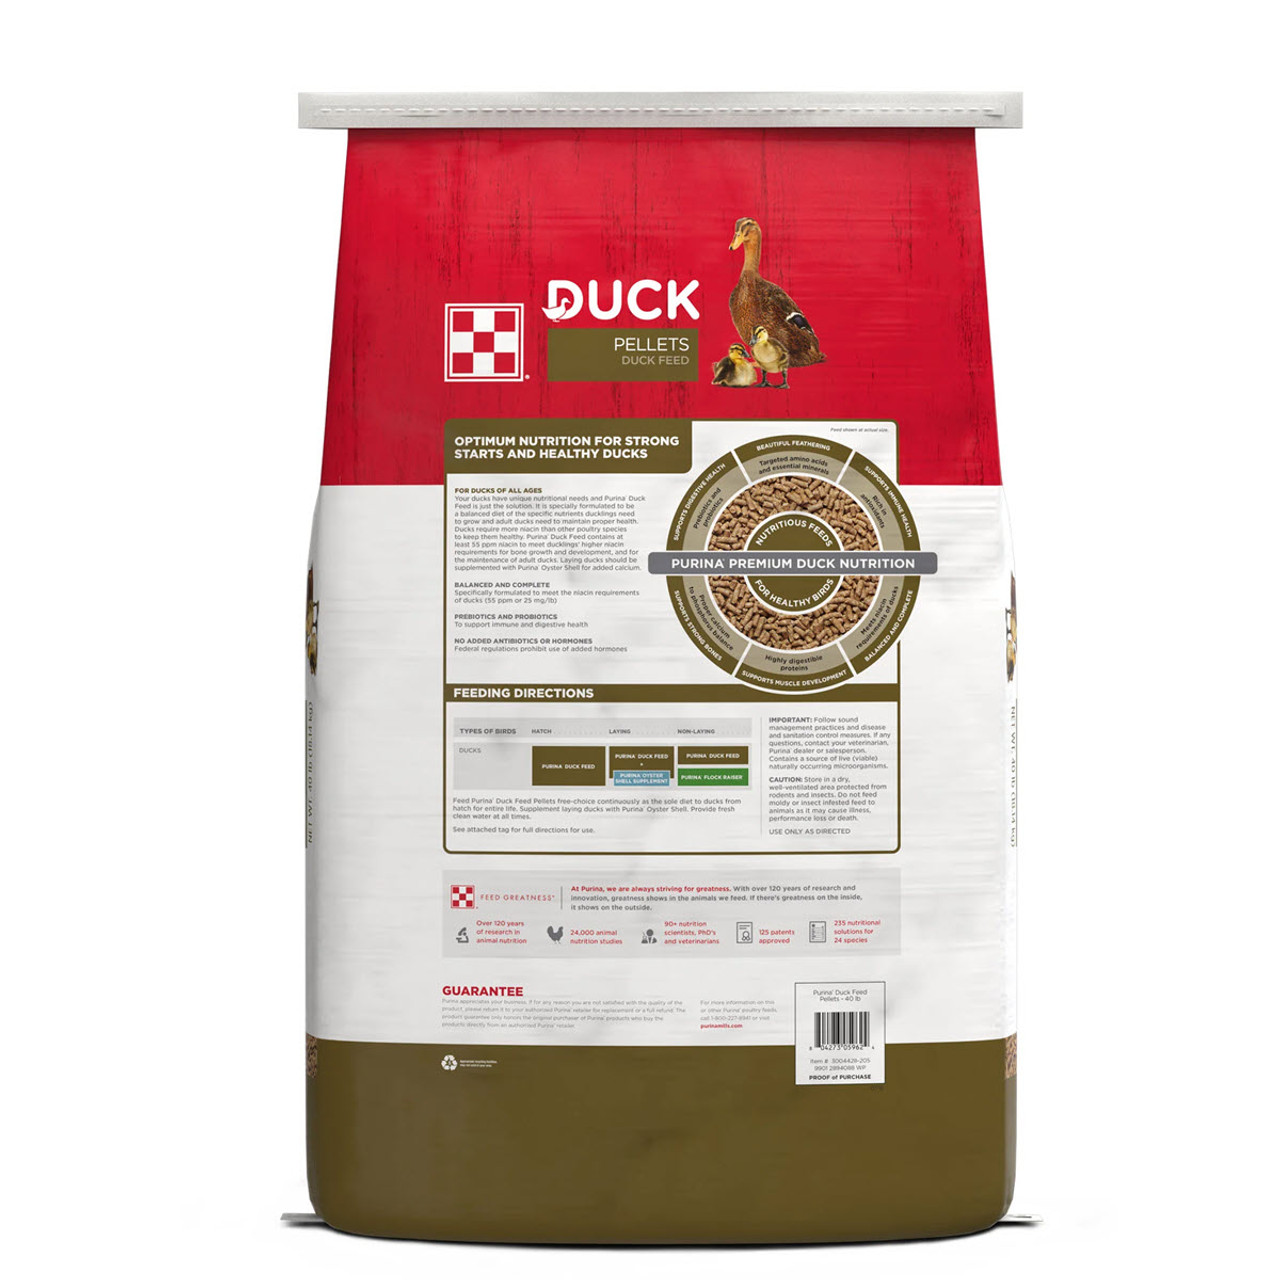 Purina Duck Feed Pellets 40 Lb